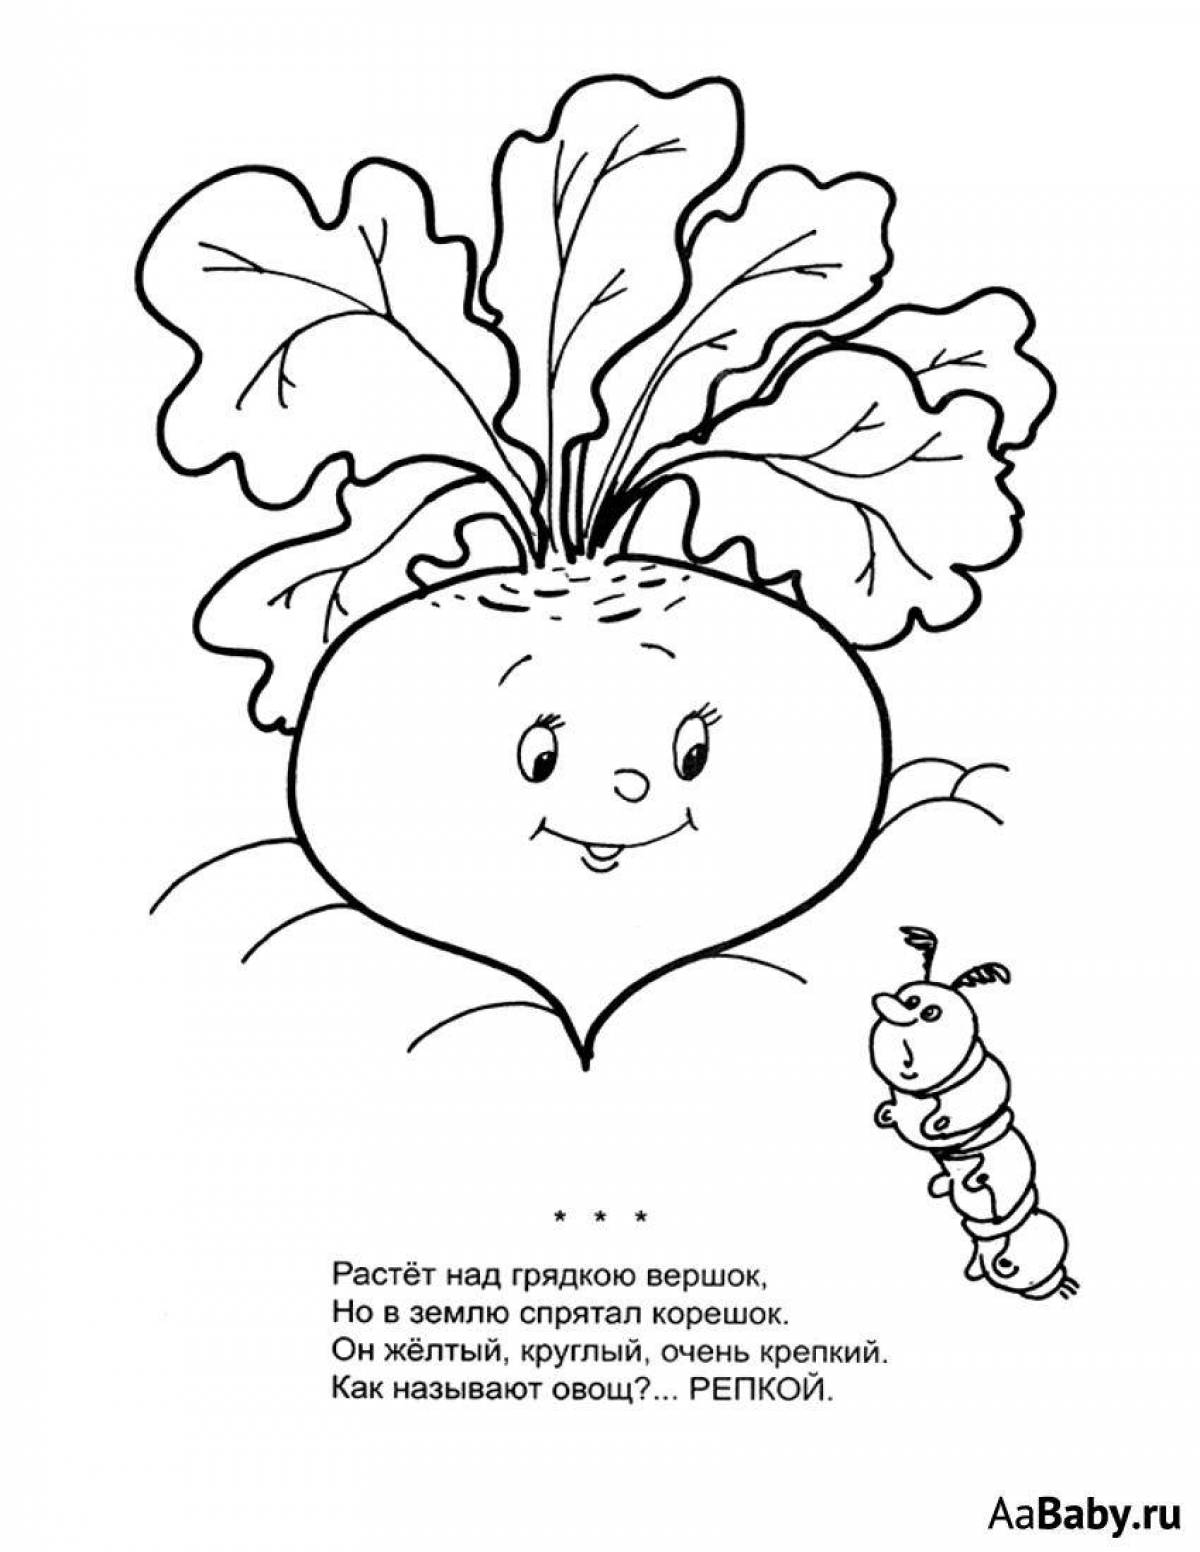 Glamorous turnip coloring book for kids